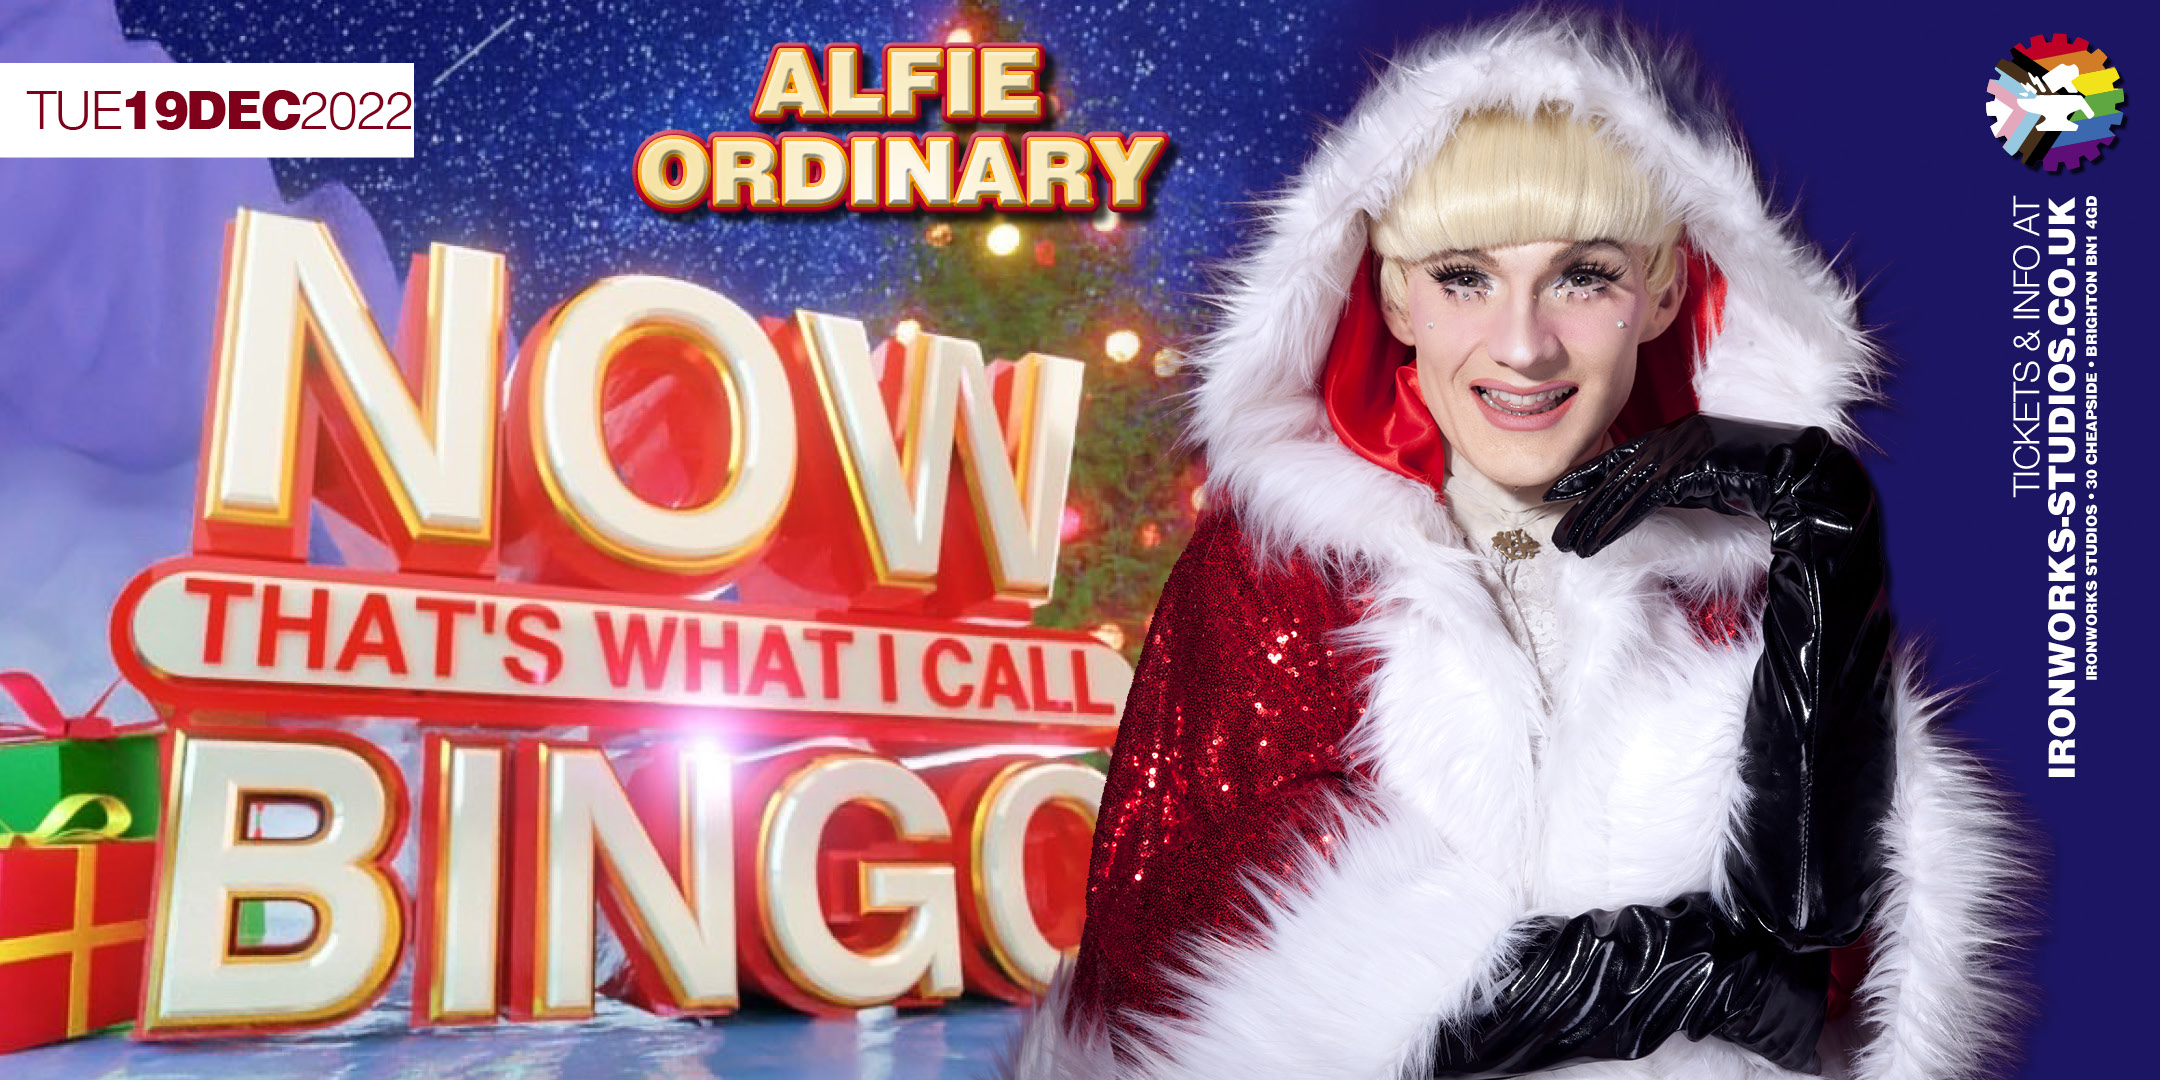 19 Dec: Alfie Ordinary’s “Now That’s What I Call Bingo” Christmas Edition